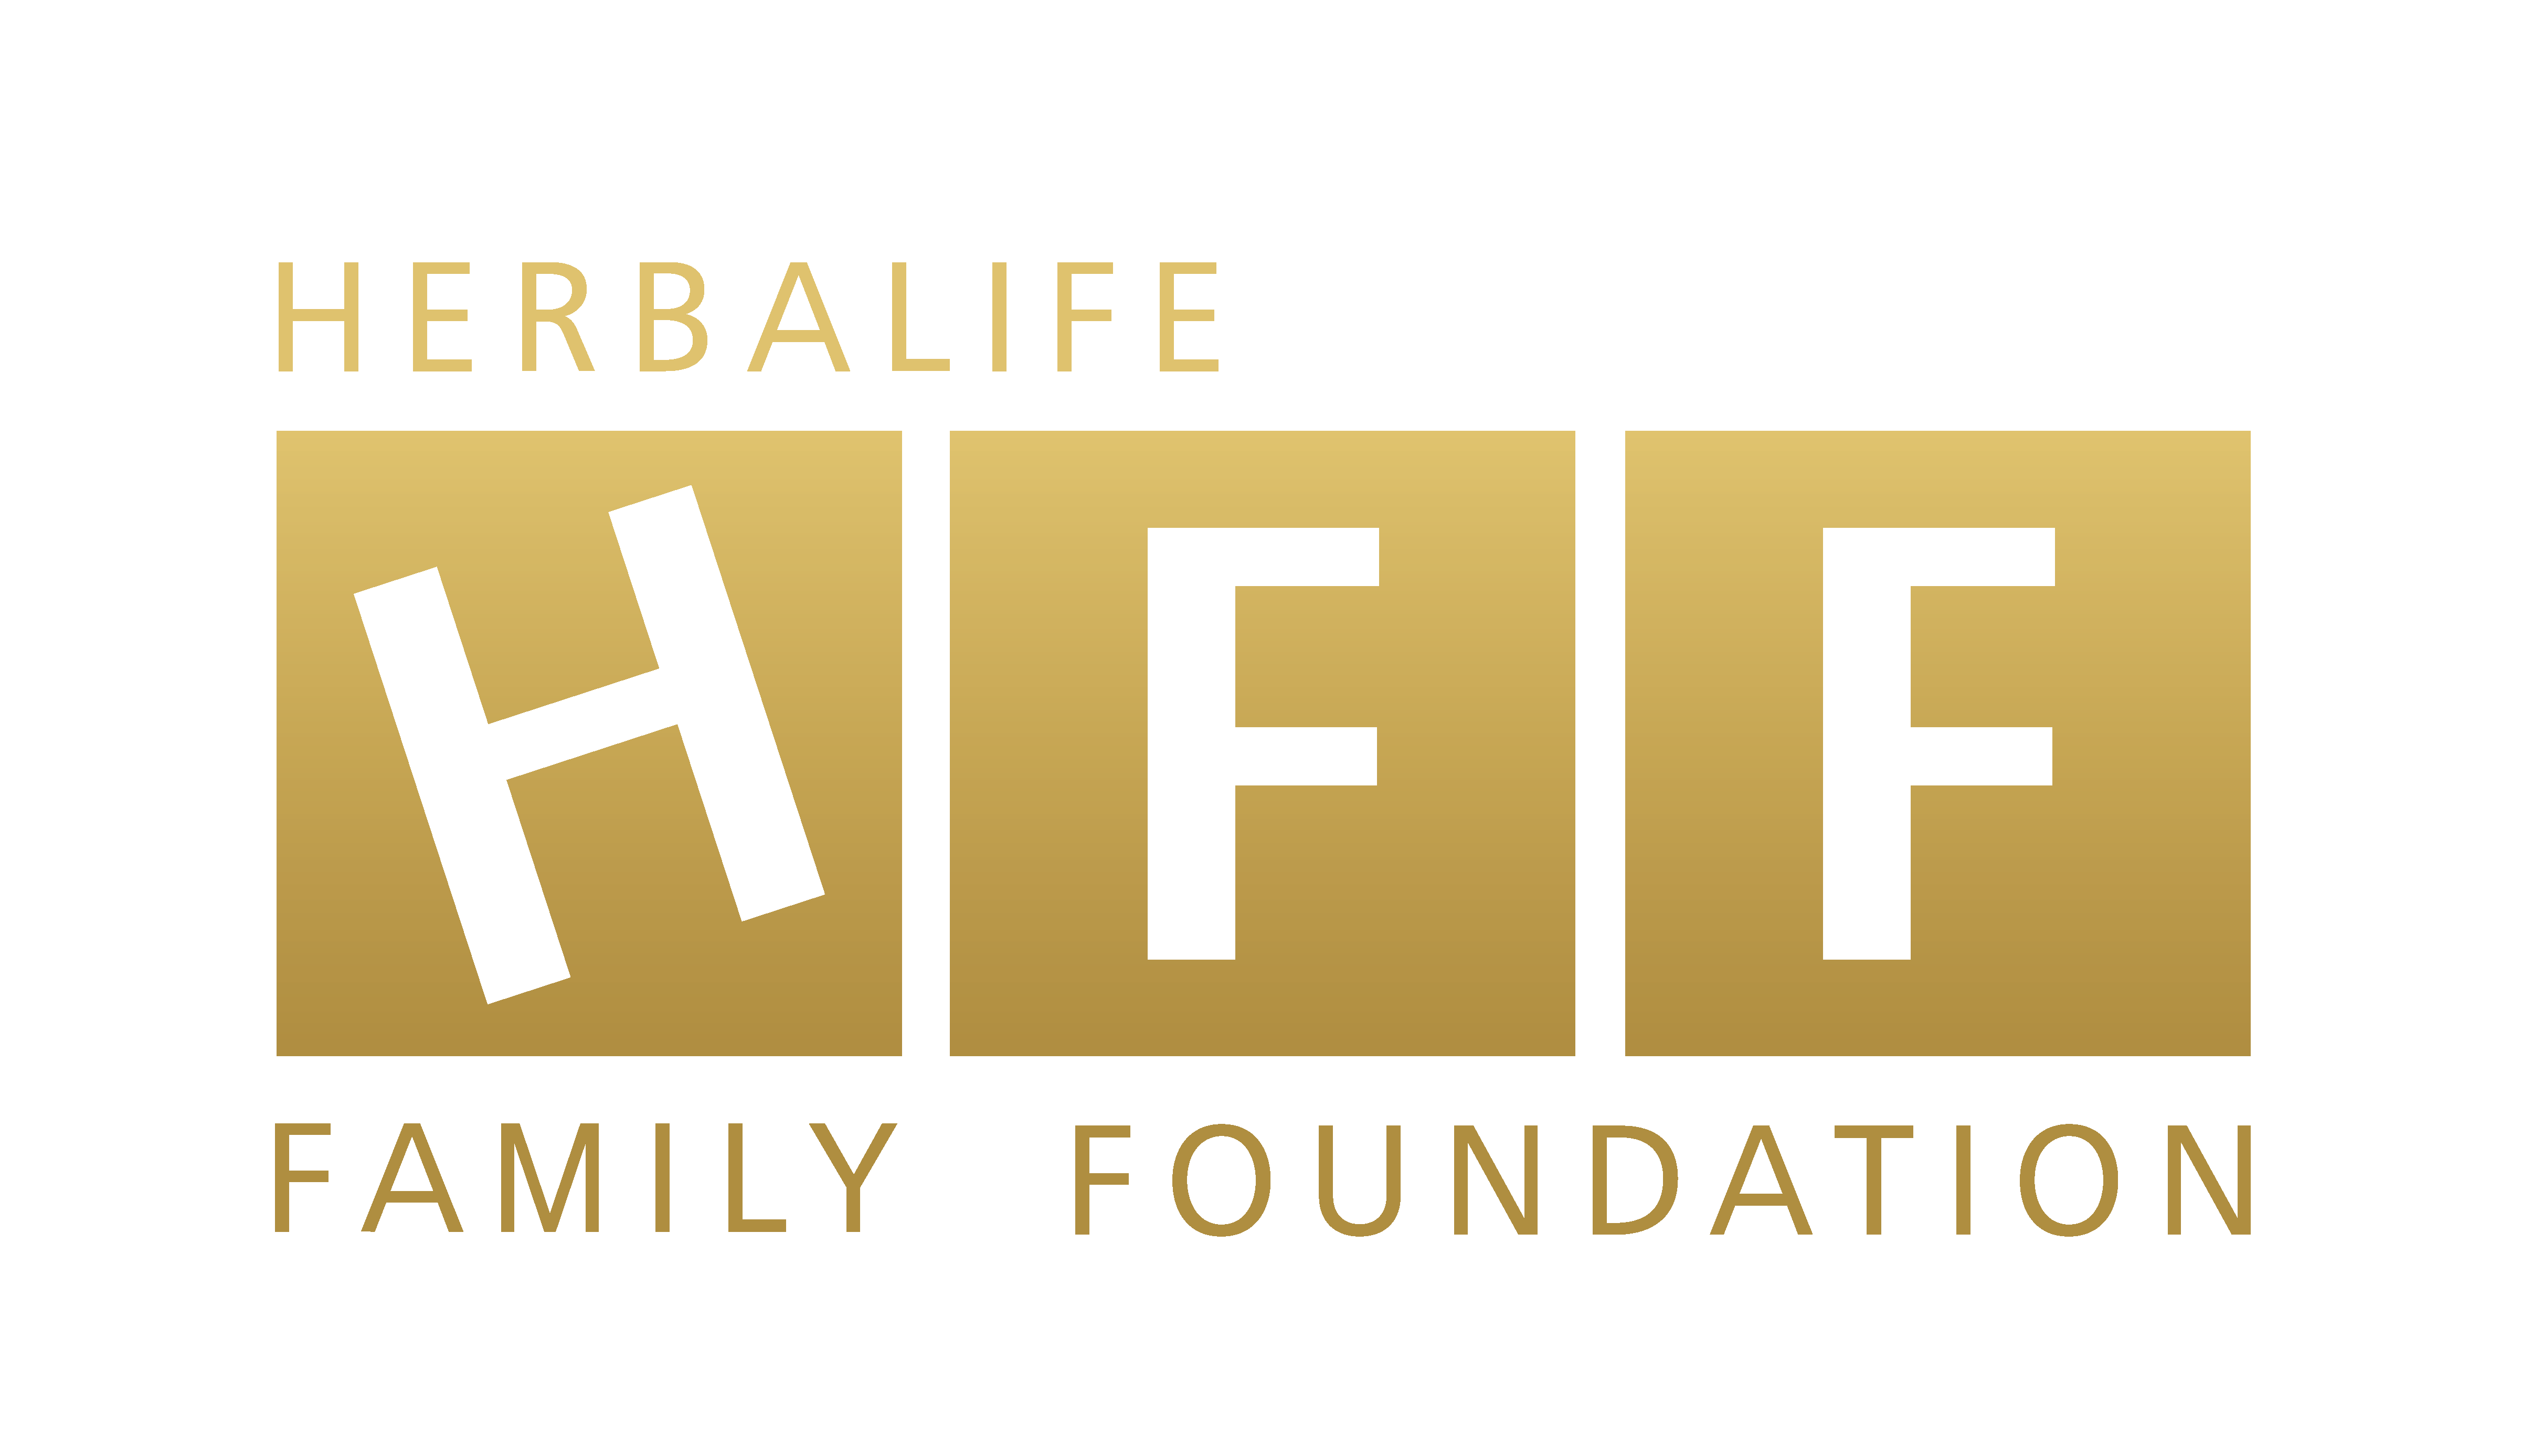 Herbalife Nutrition Foundation